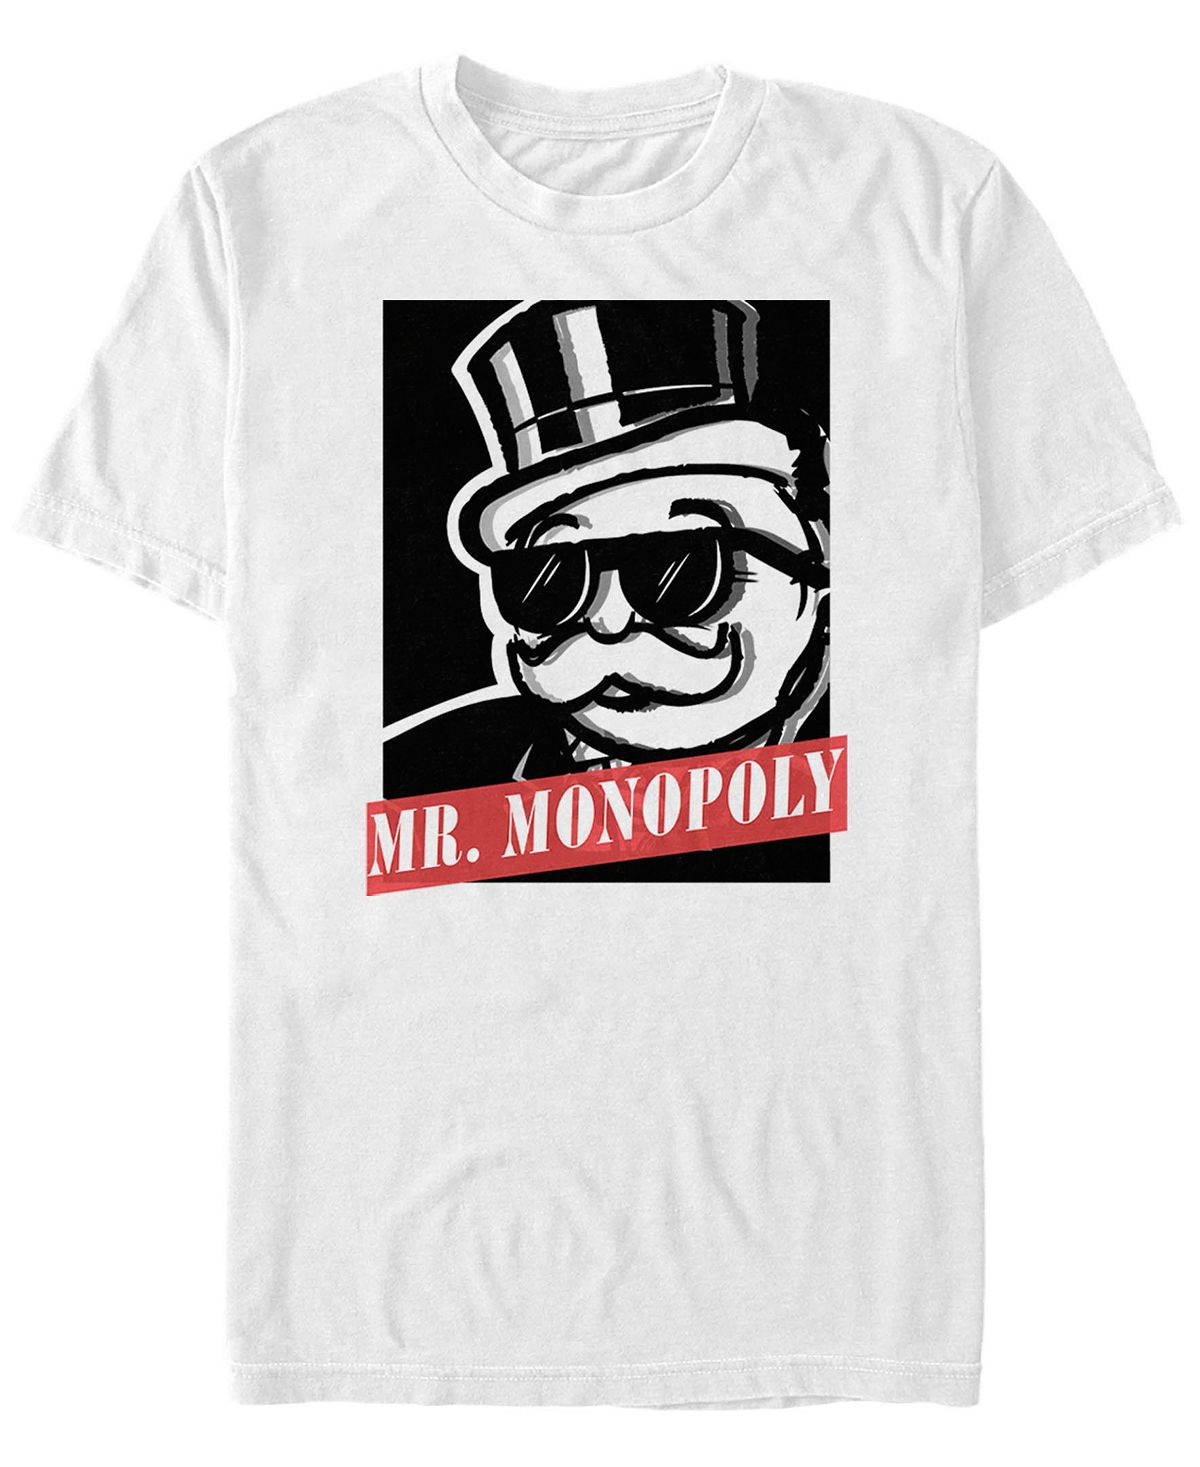 Мужская футболка с коротким рукавом mr monopoly с графическим плакатом Fifth Sun, белый мужская футболка с коротким рукавом в рождественском стиле monopoly fifth sun синий